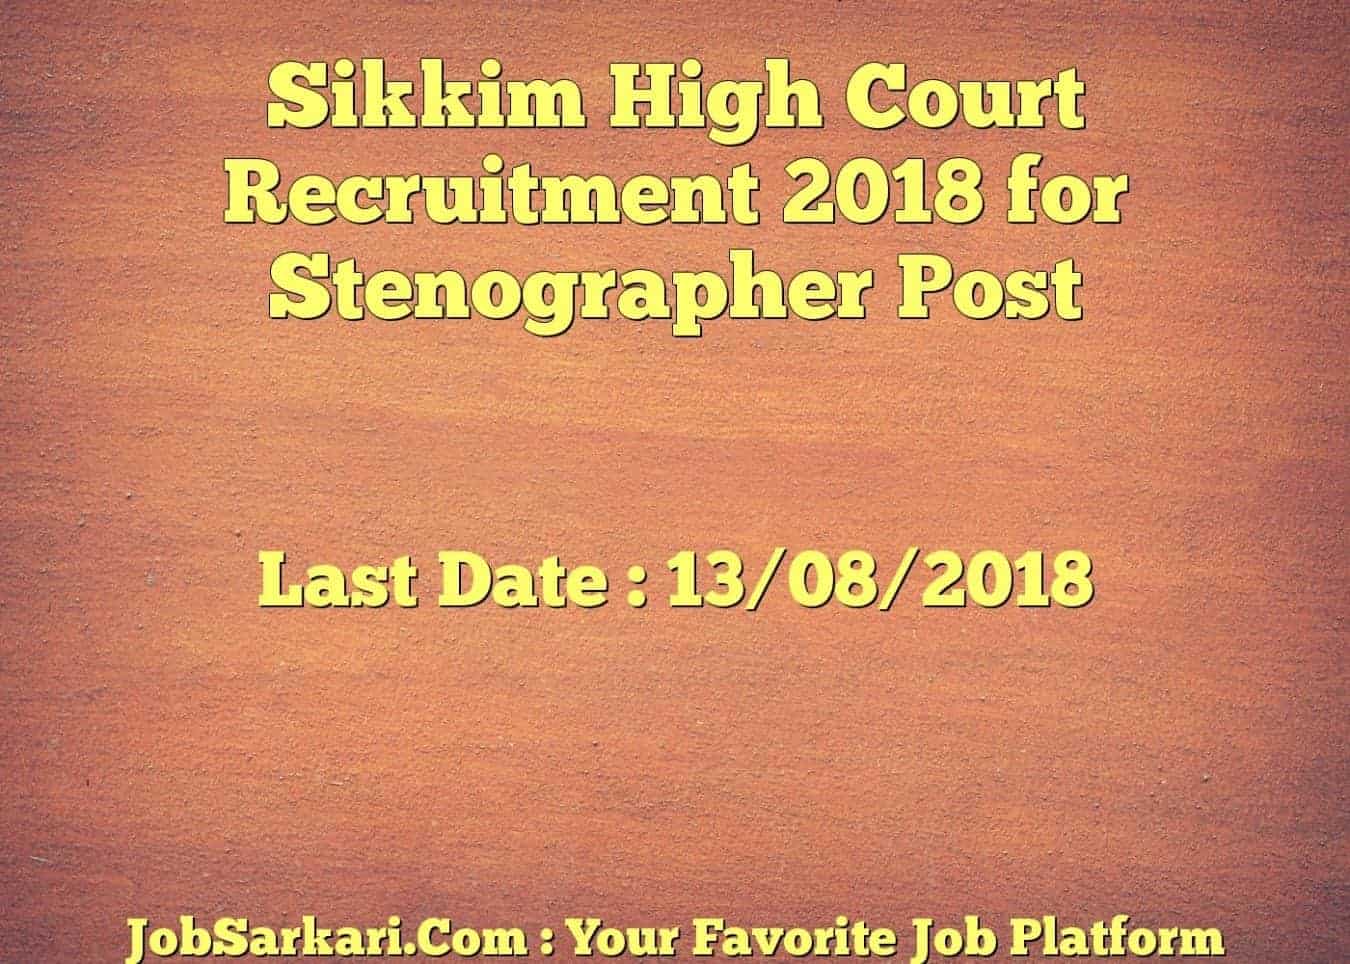 Sikkim High Court Recruitment 2018 for Stenographer Post